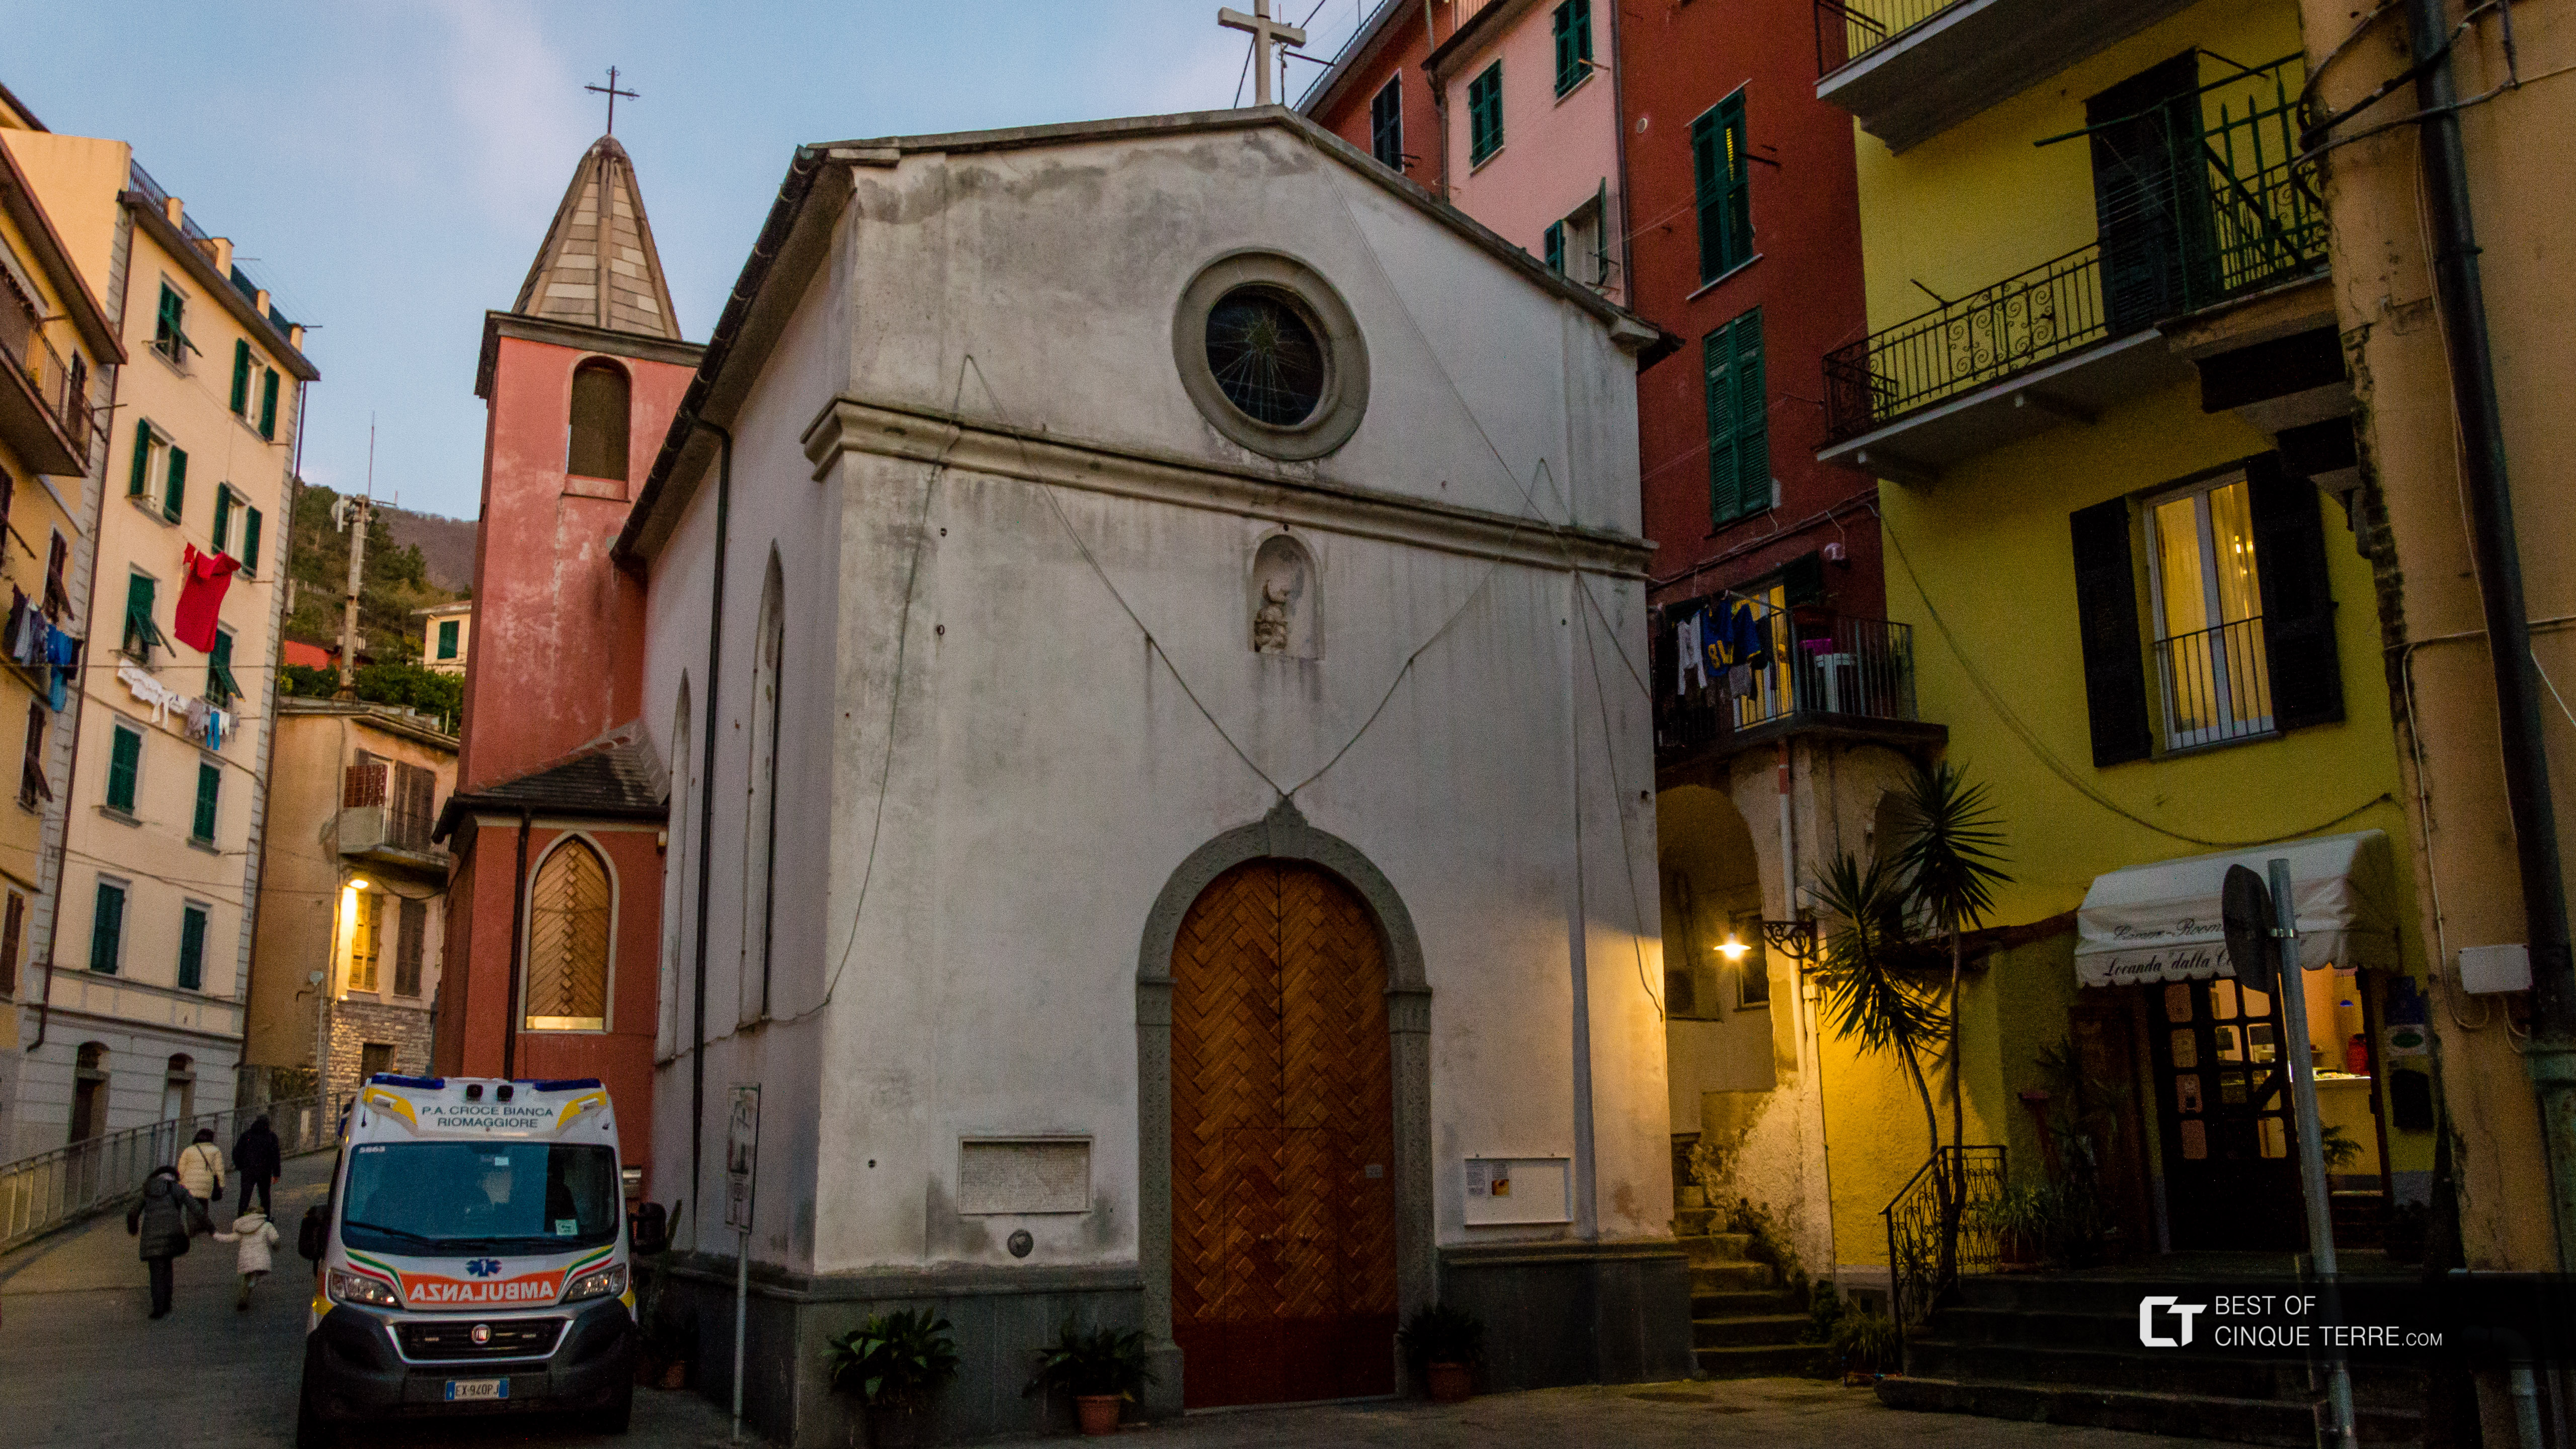 Oratório de Santa Maria Assunta, Riomaggiore, Cinque Terre, Itália